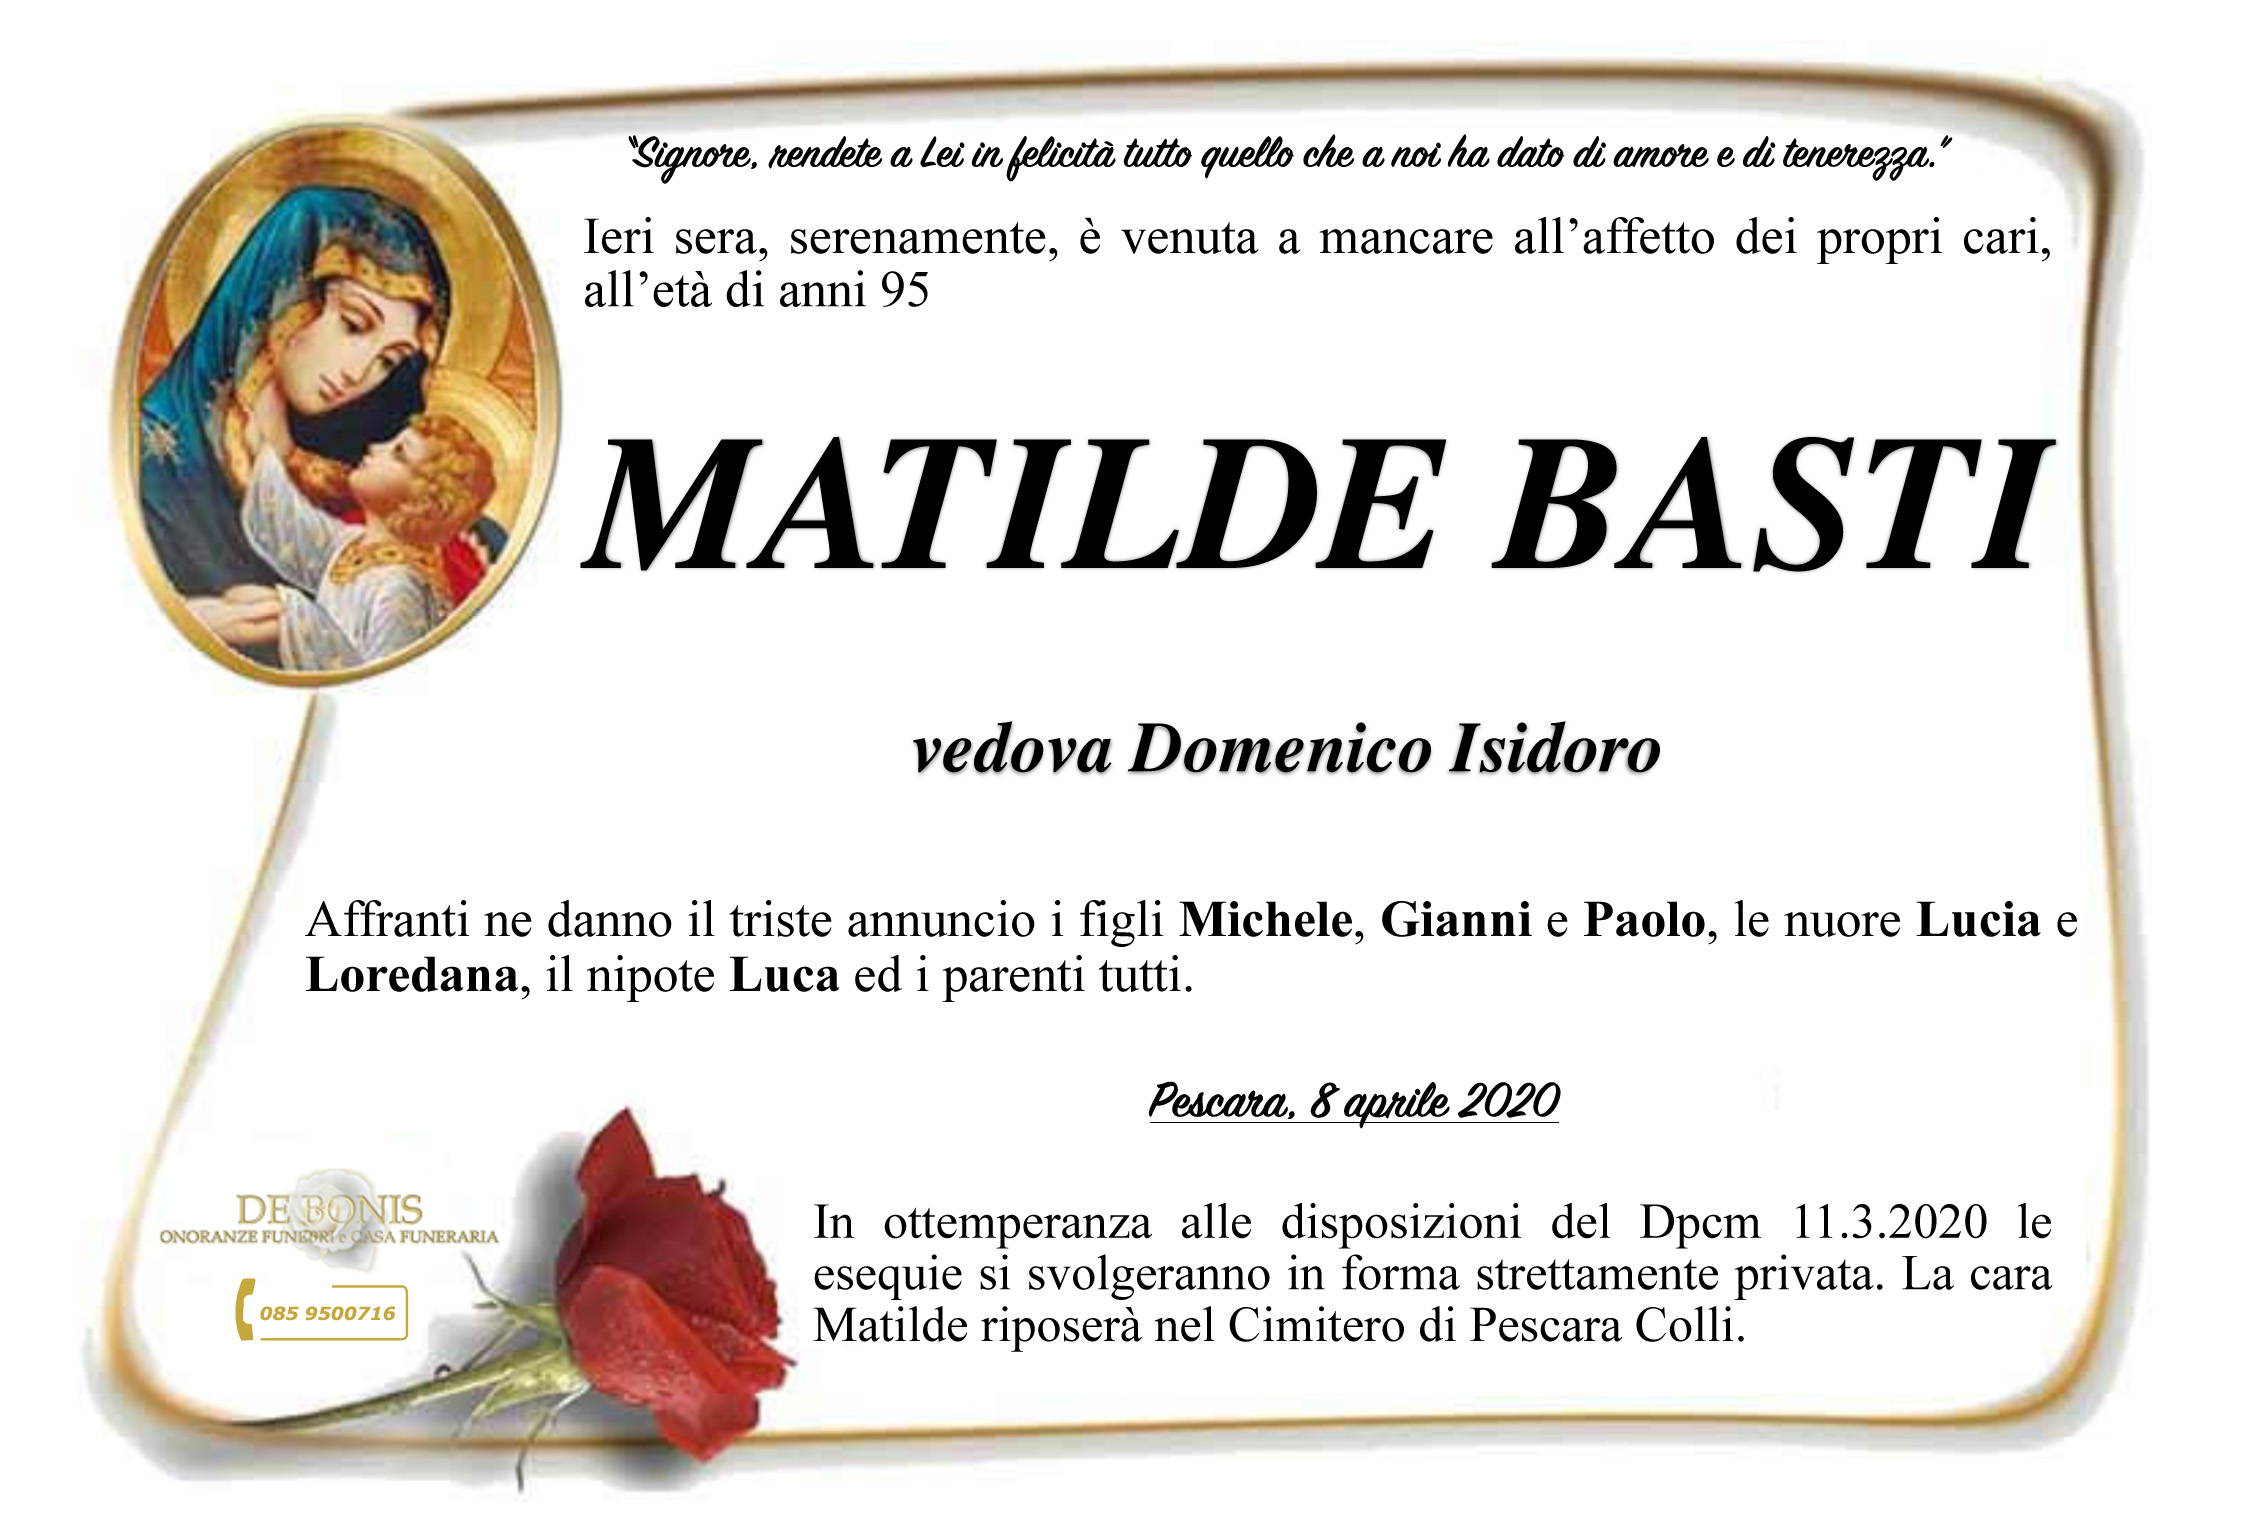 Matilde Basti